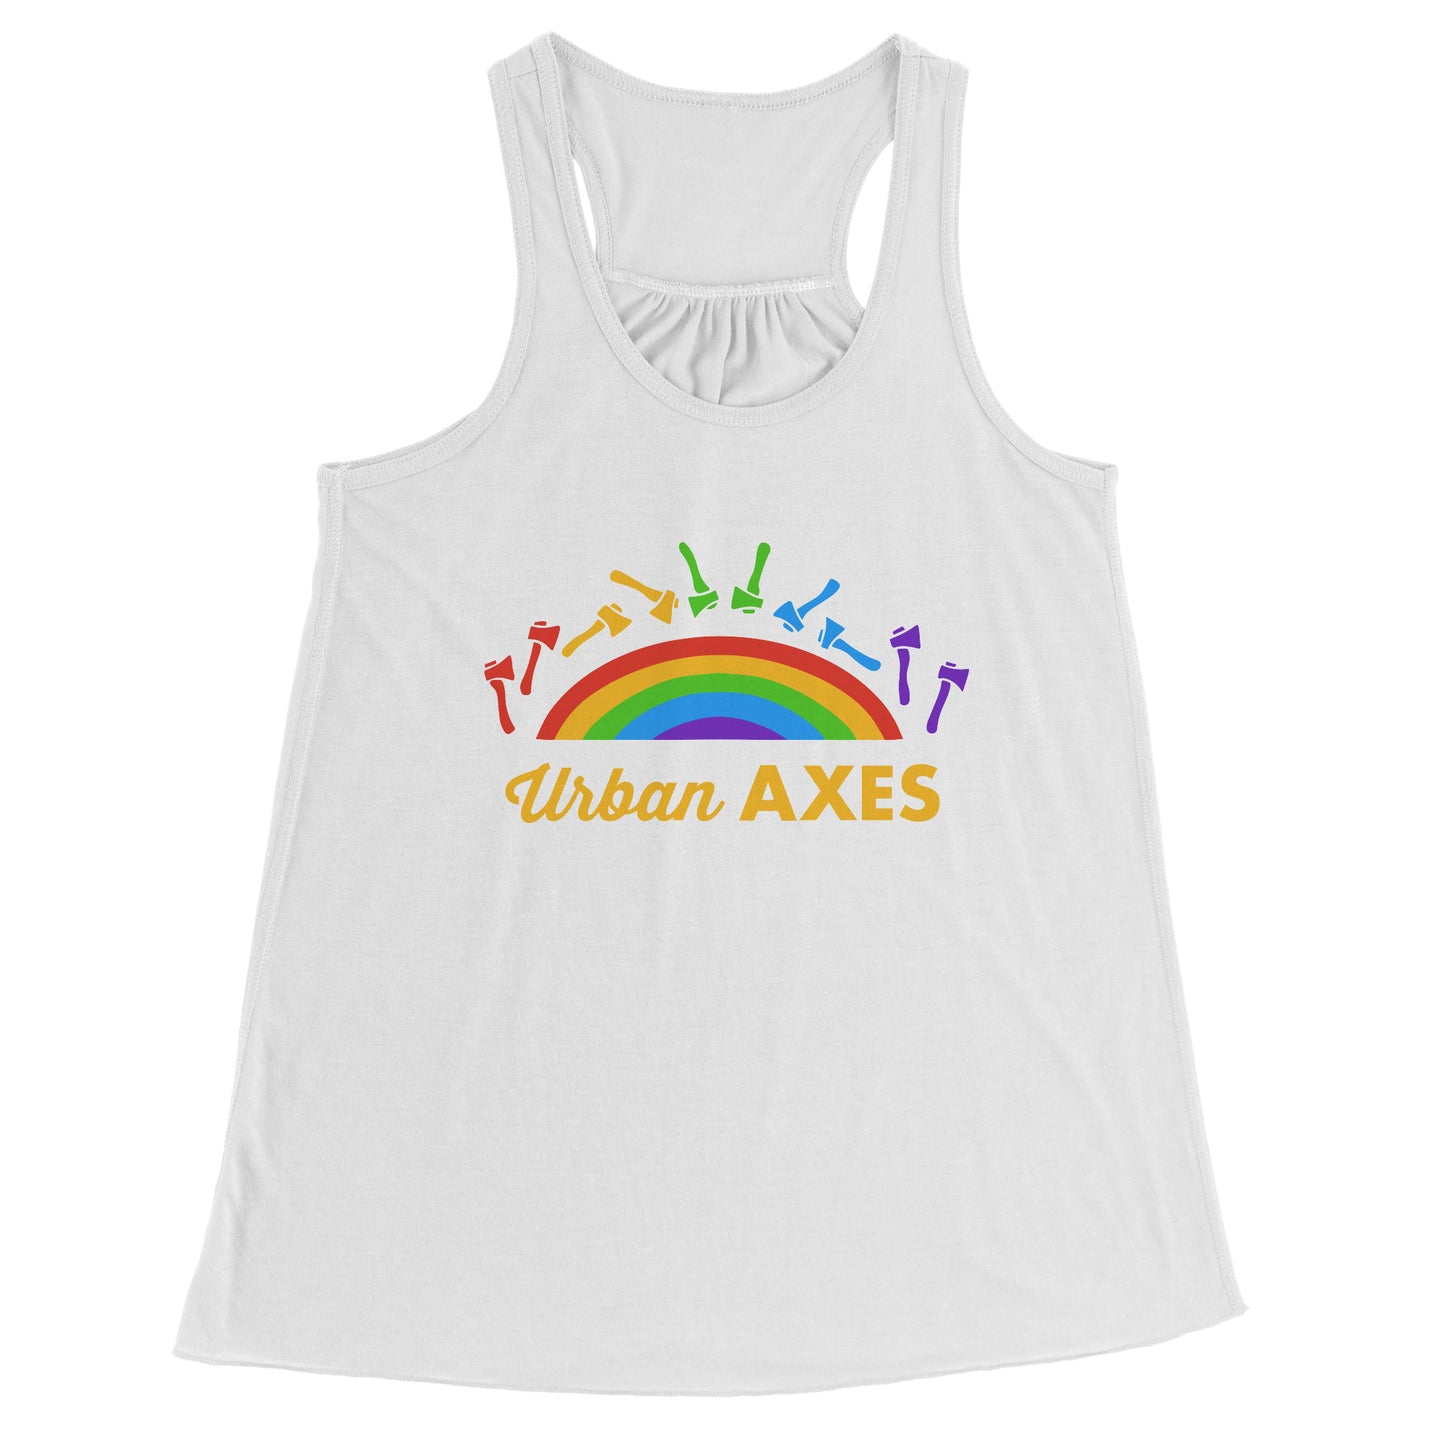 Urban Axes Rainbow Pride Shirt - Women's Racerback Tank